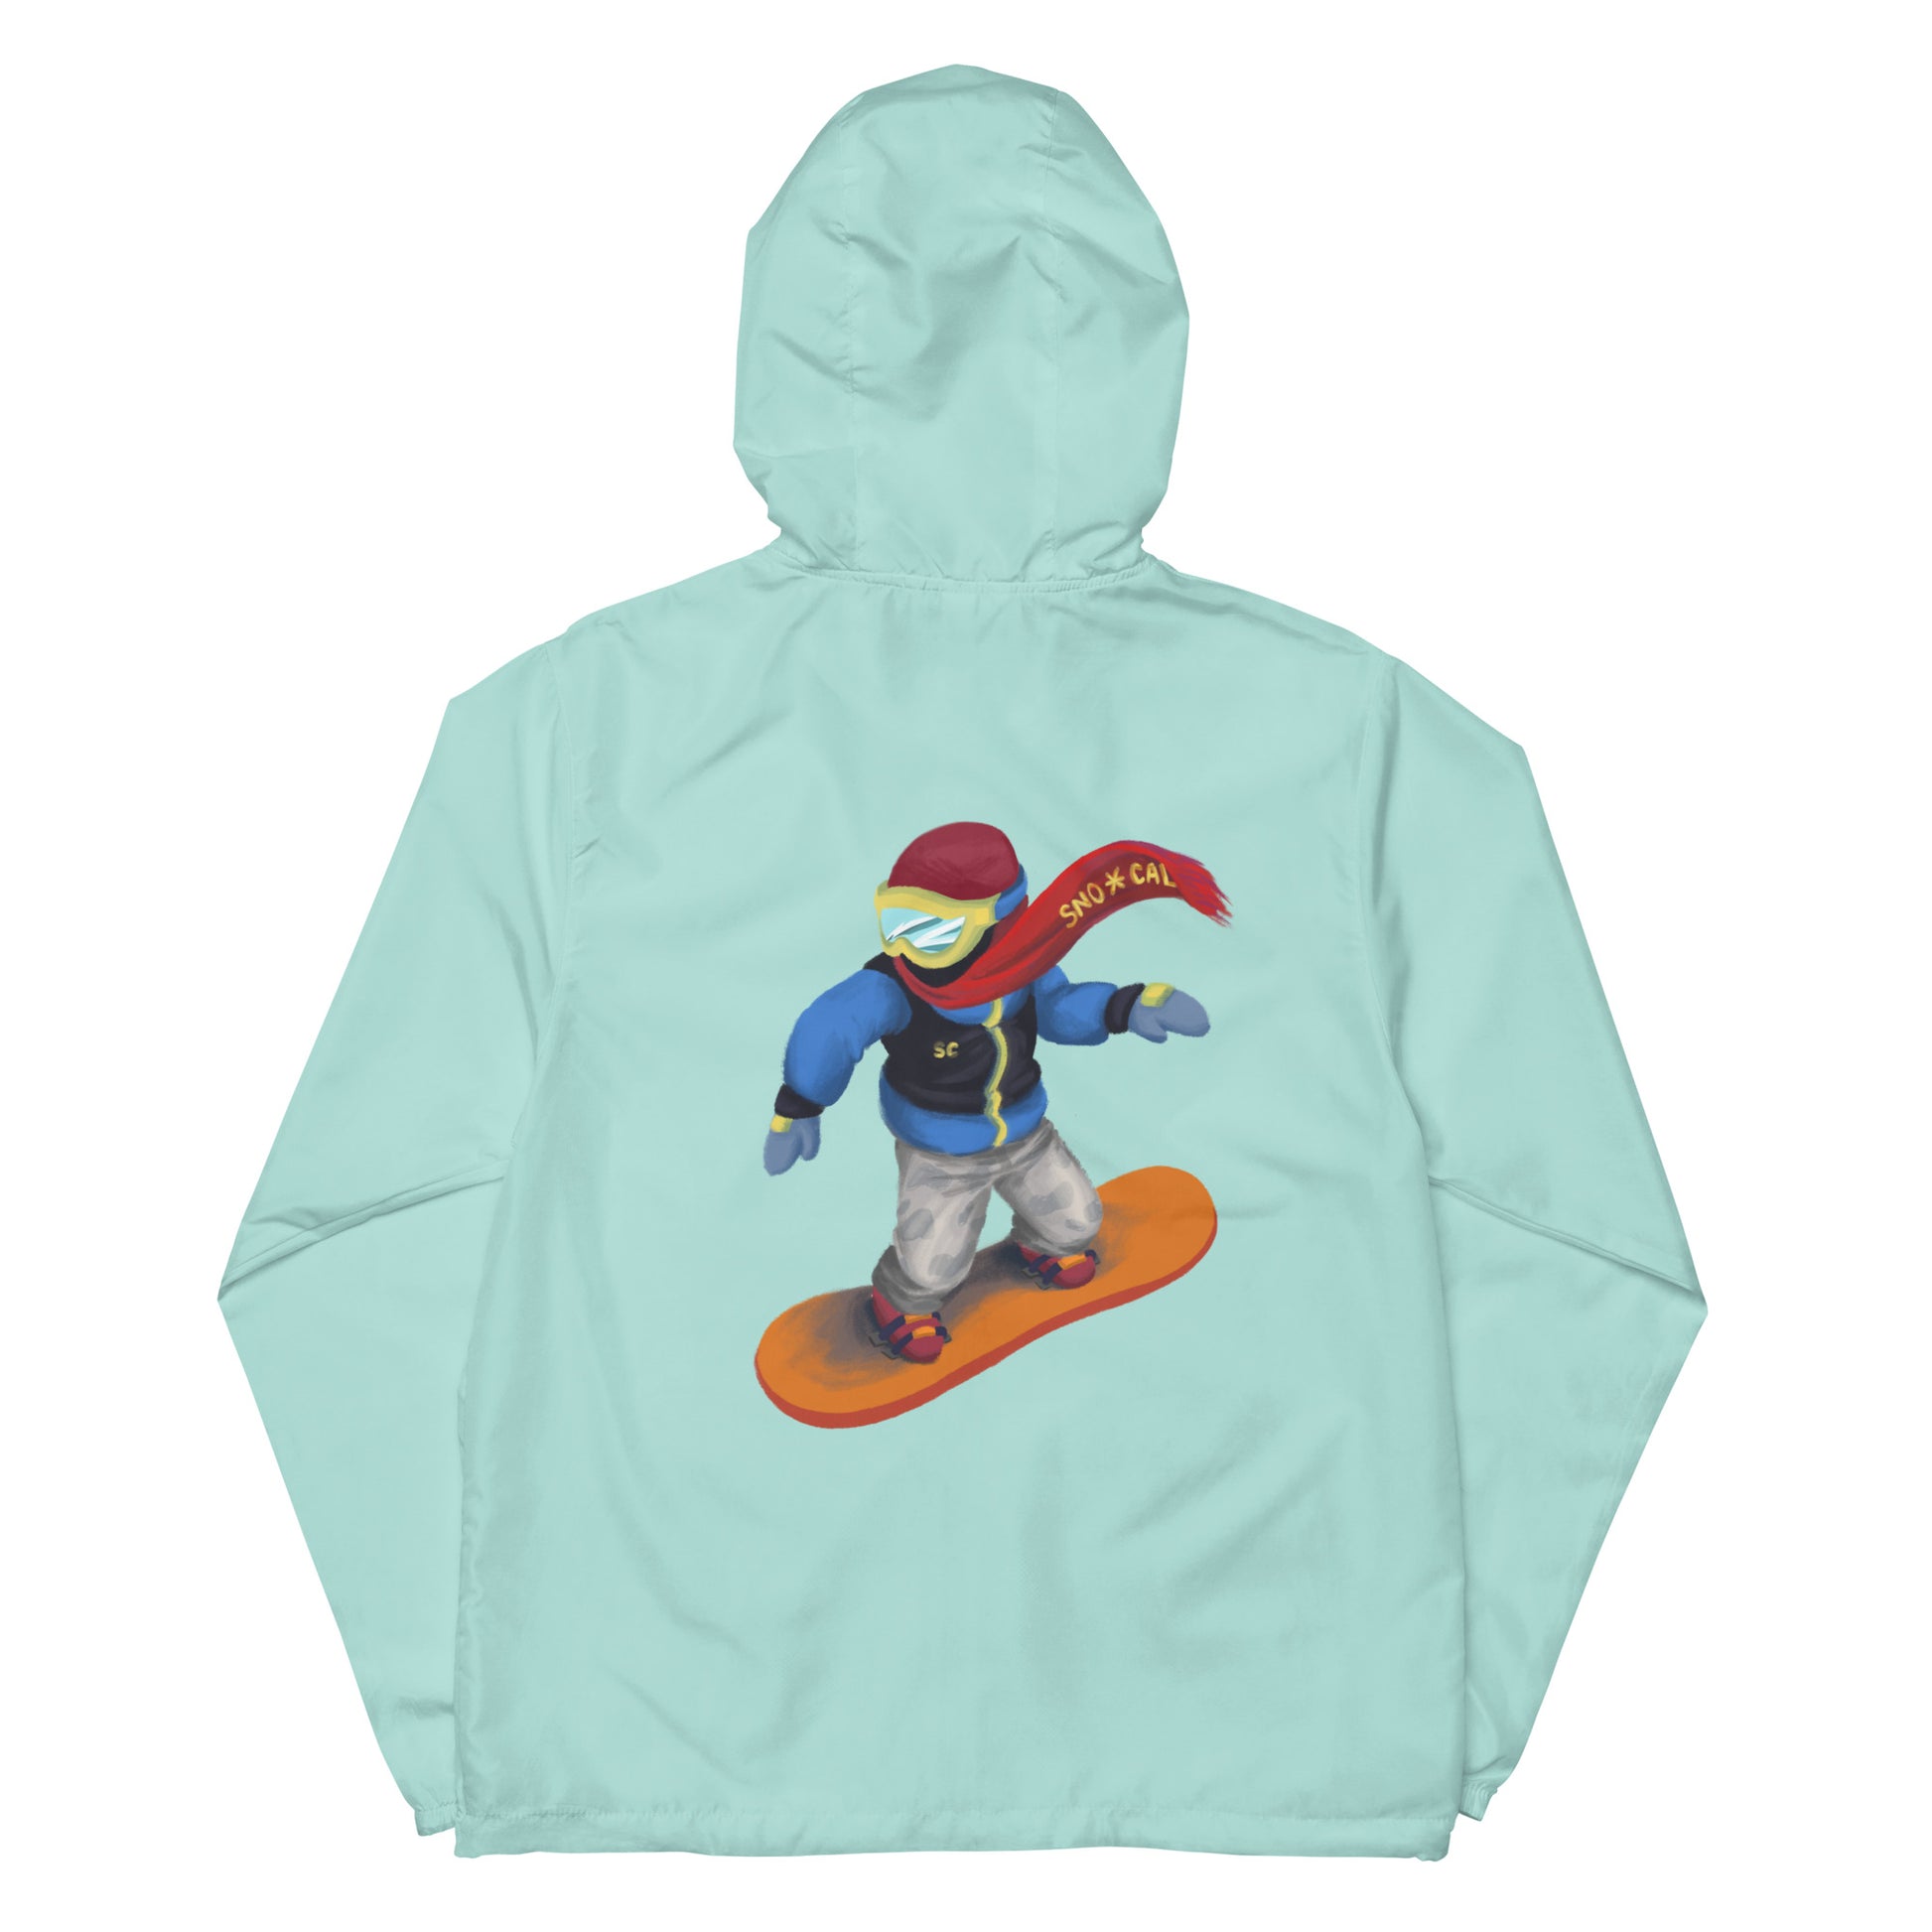 aqua snowboard emoji hoodie